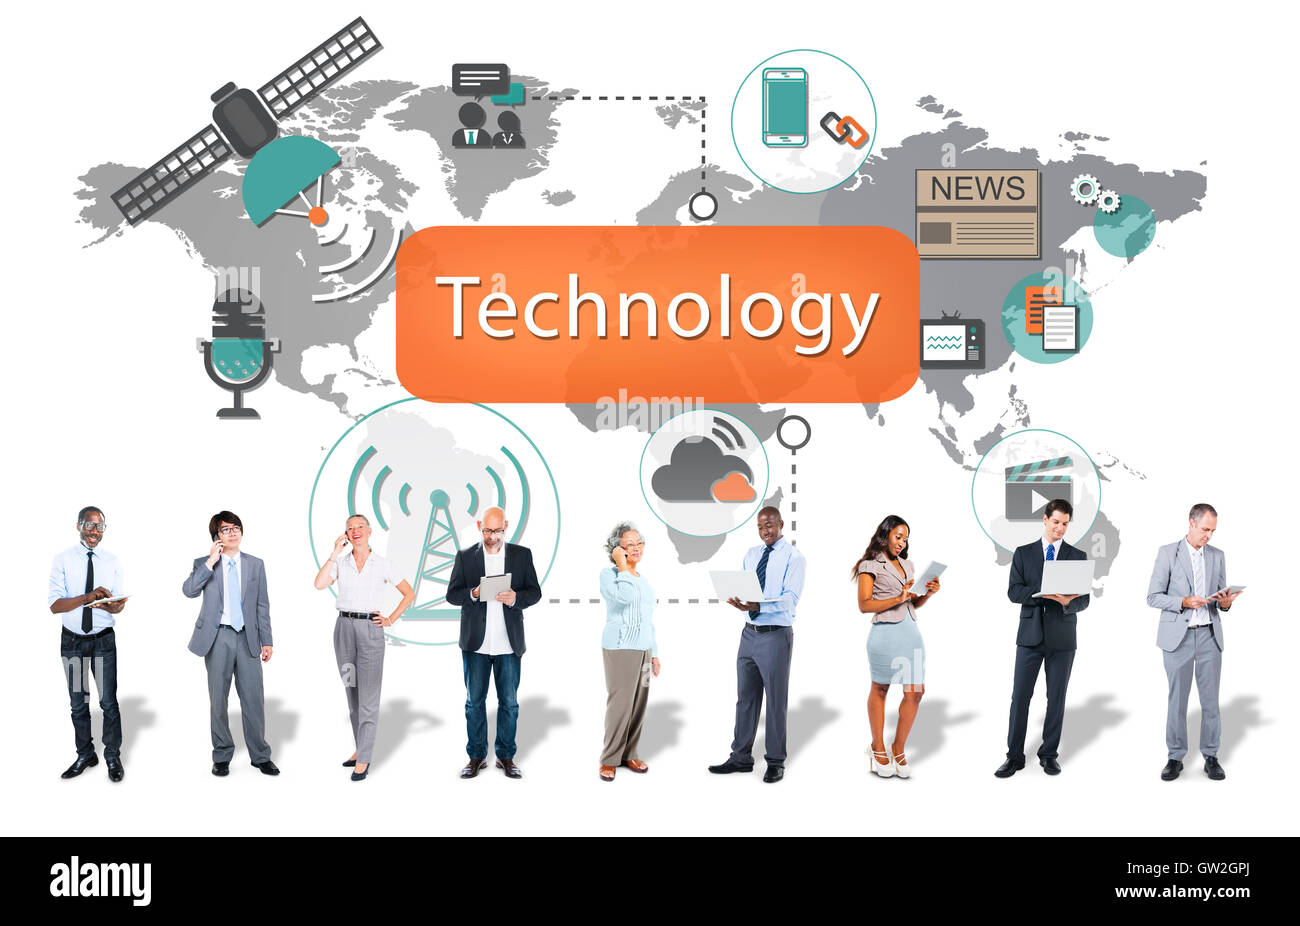 Technology Digital Evolution Innovation Concept Stock Photo